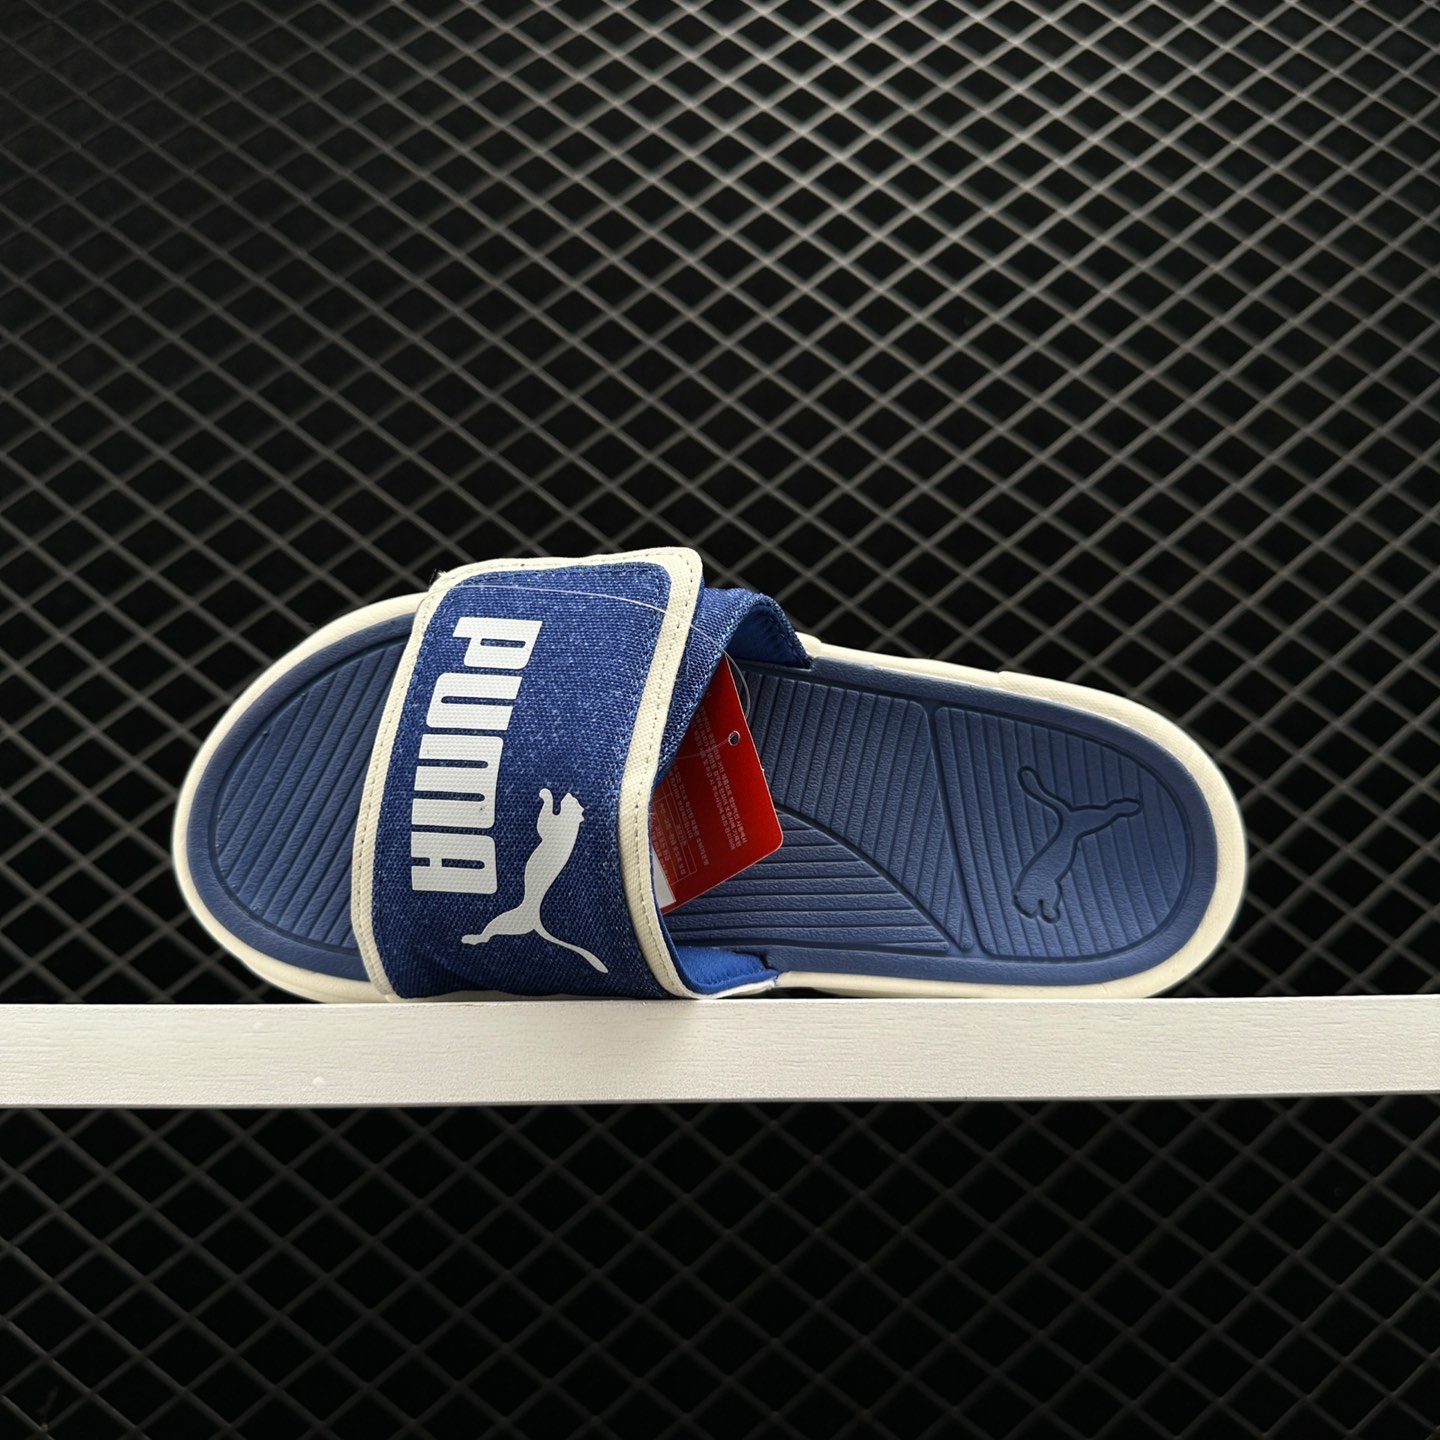 Puma Royalcat Comfort Slides 'Denim' - Stylish and Comfortable Slides | 389154 01